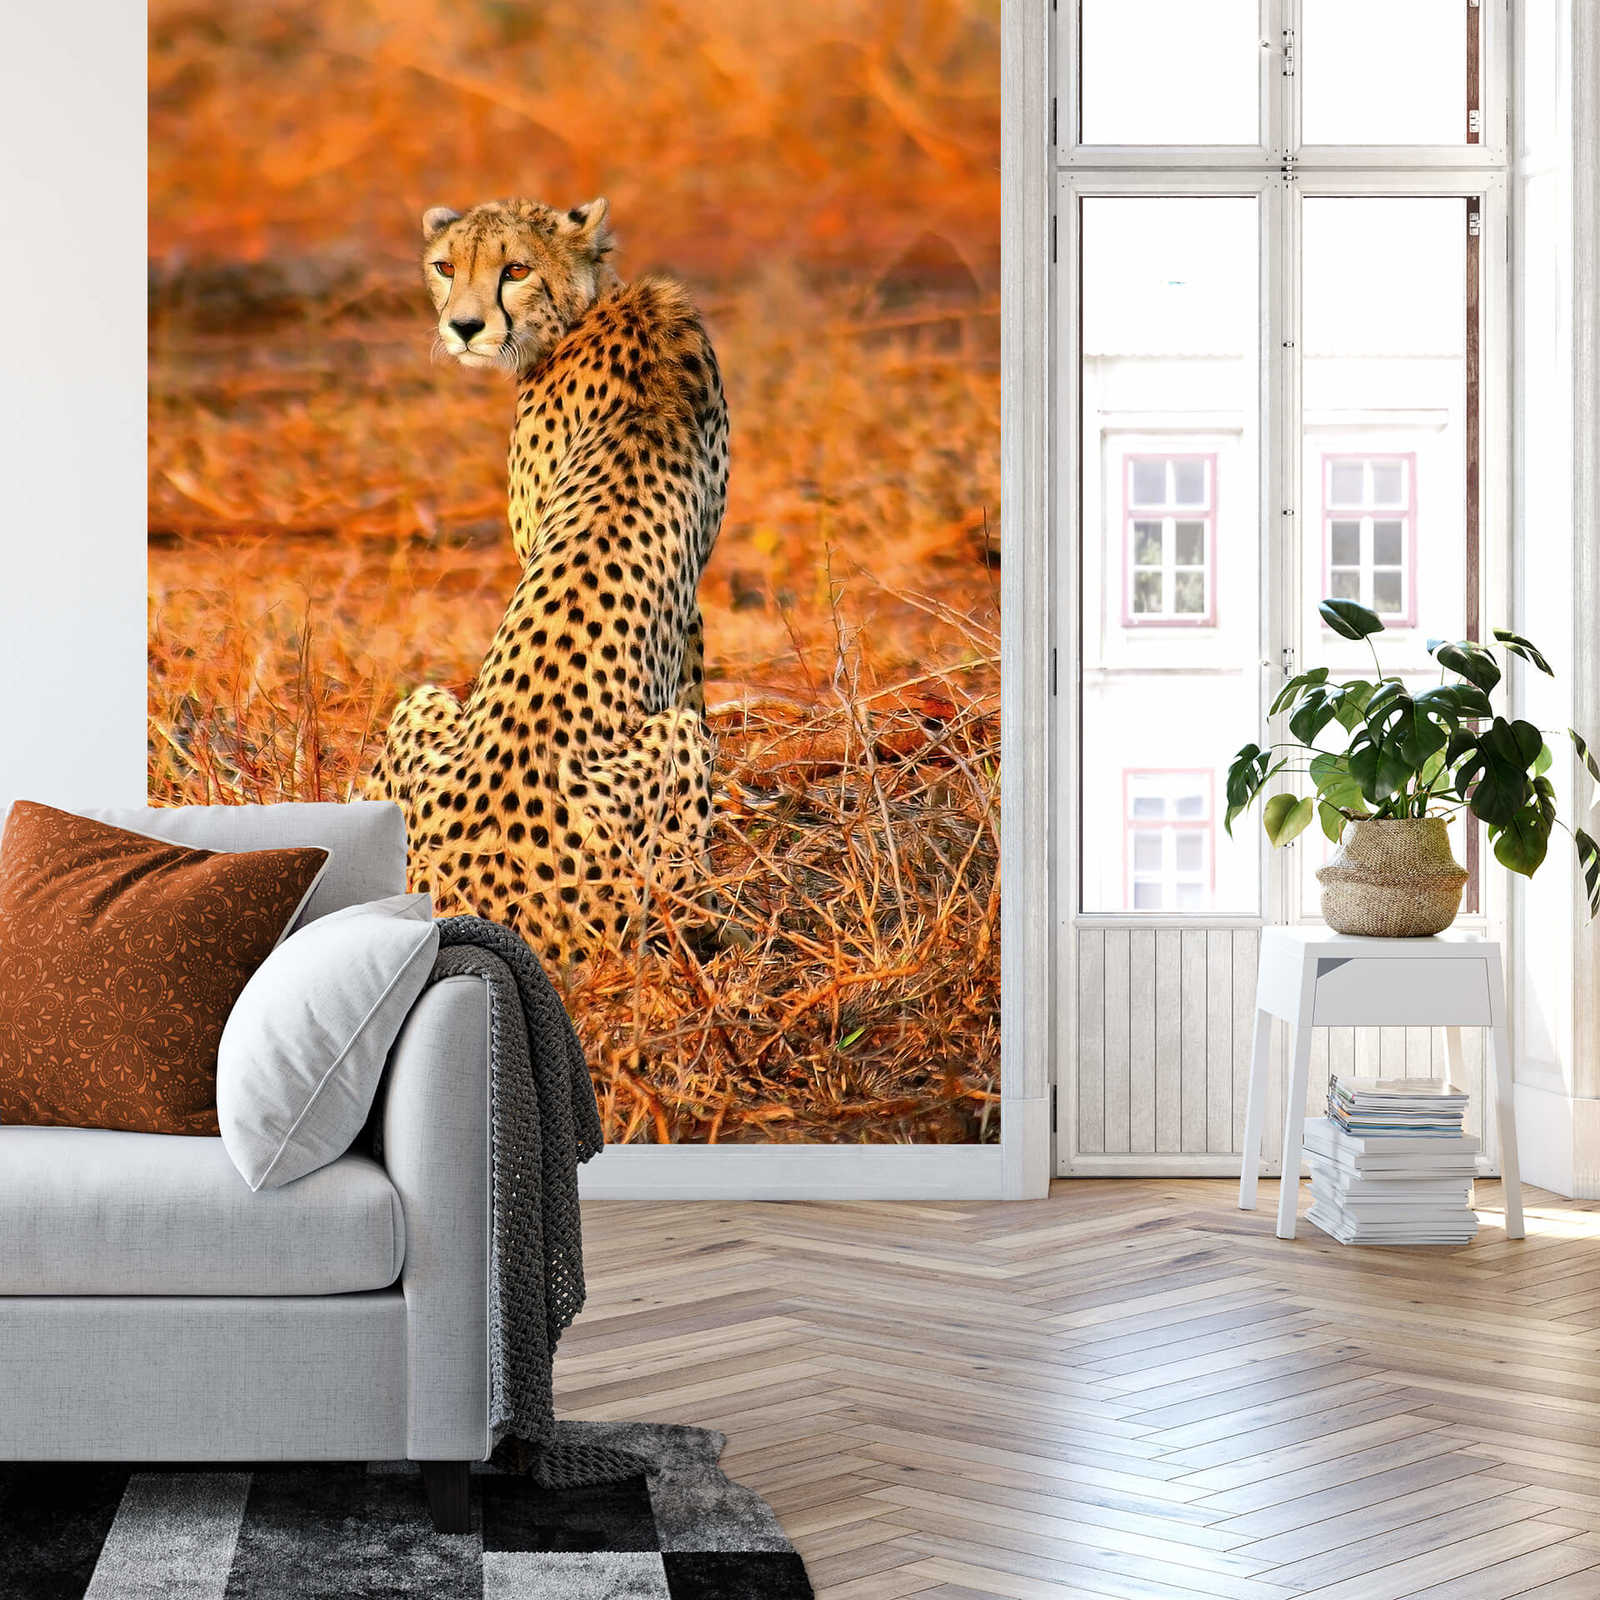             Safari Behang Dier Luipaard - Geel, Oranje, Zwart
        